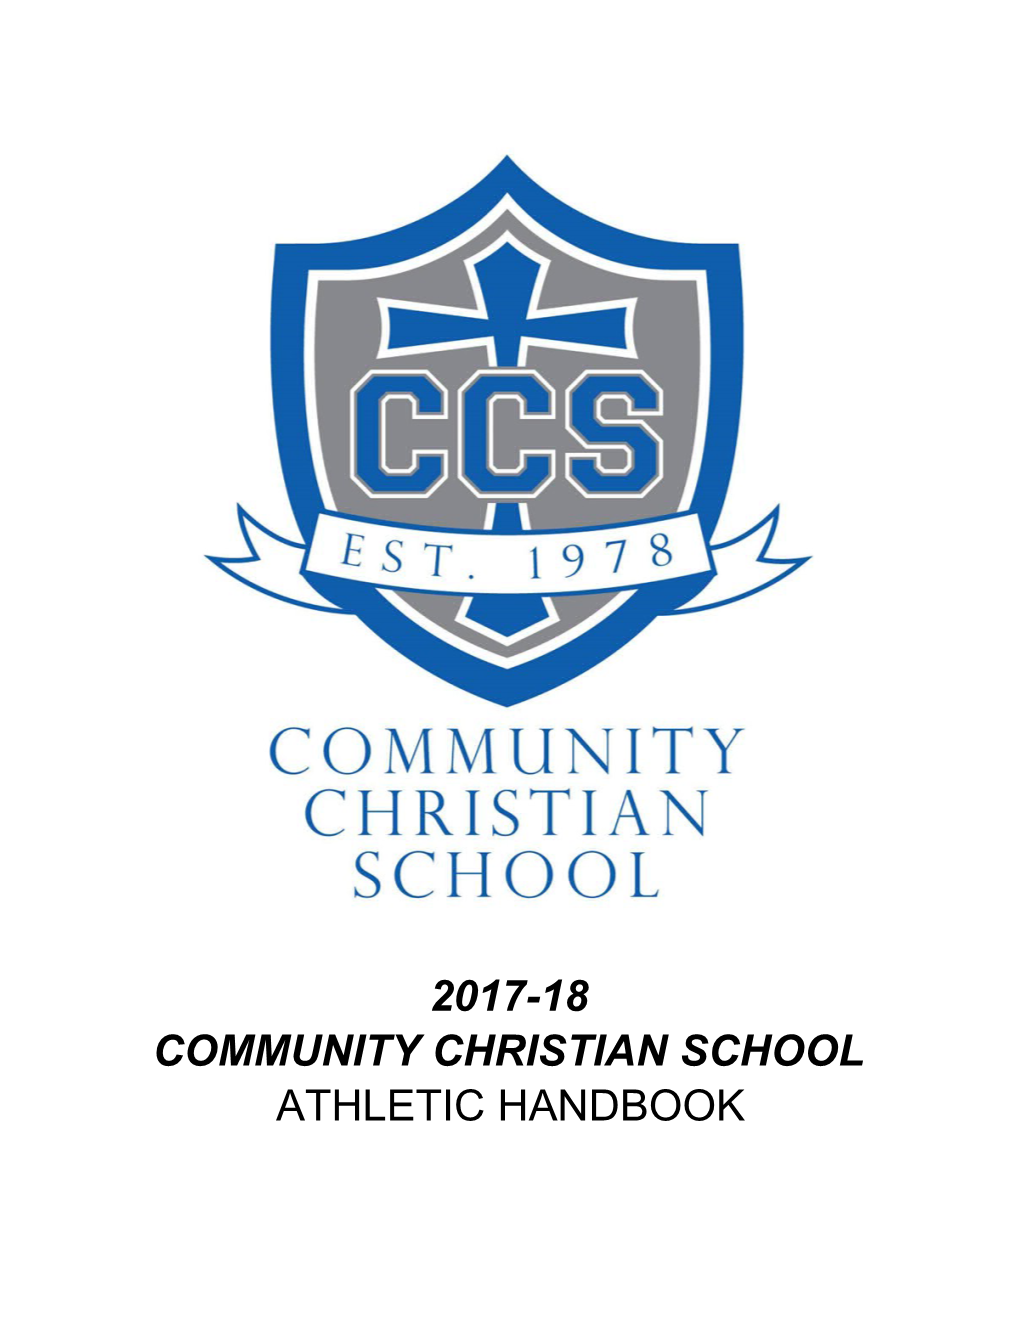 Community Christian School Athletic Handbook